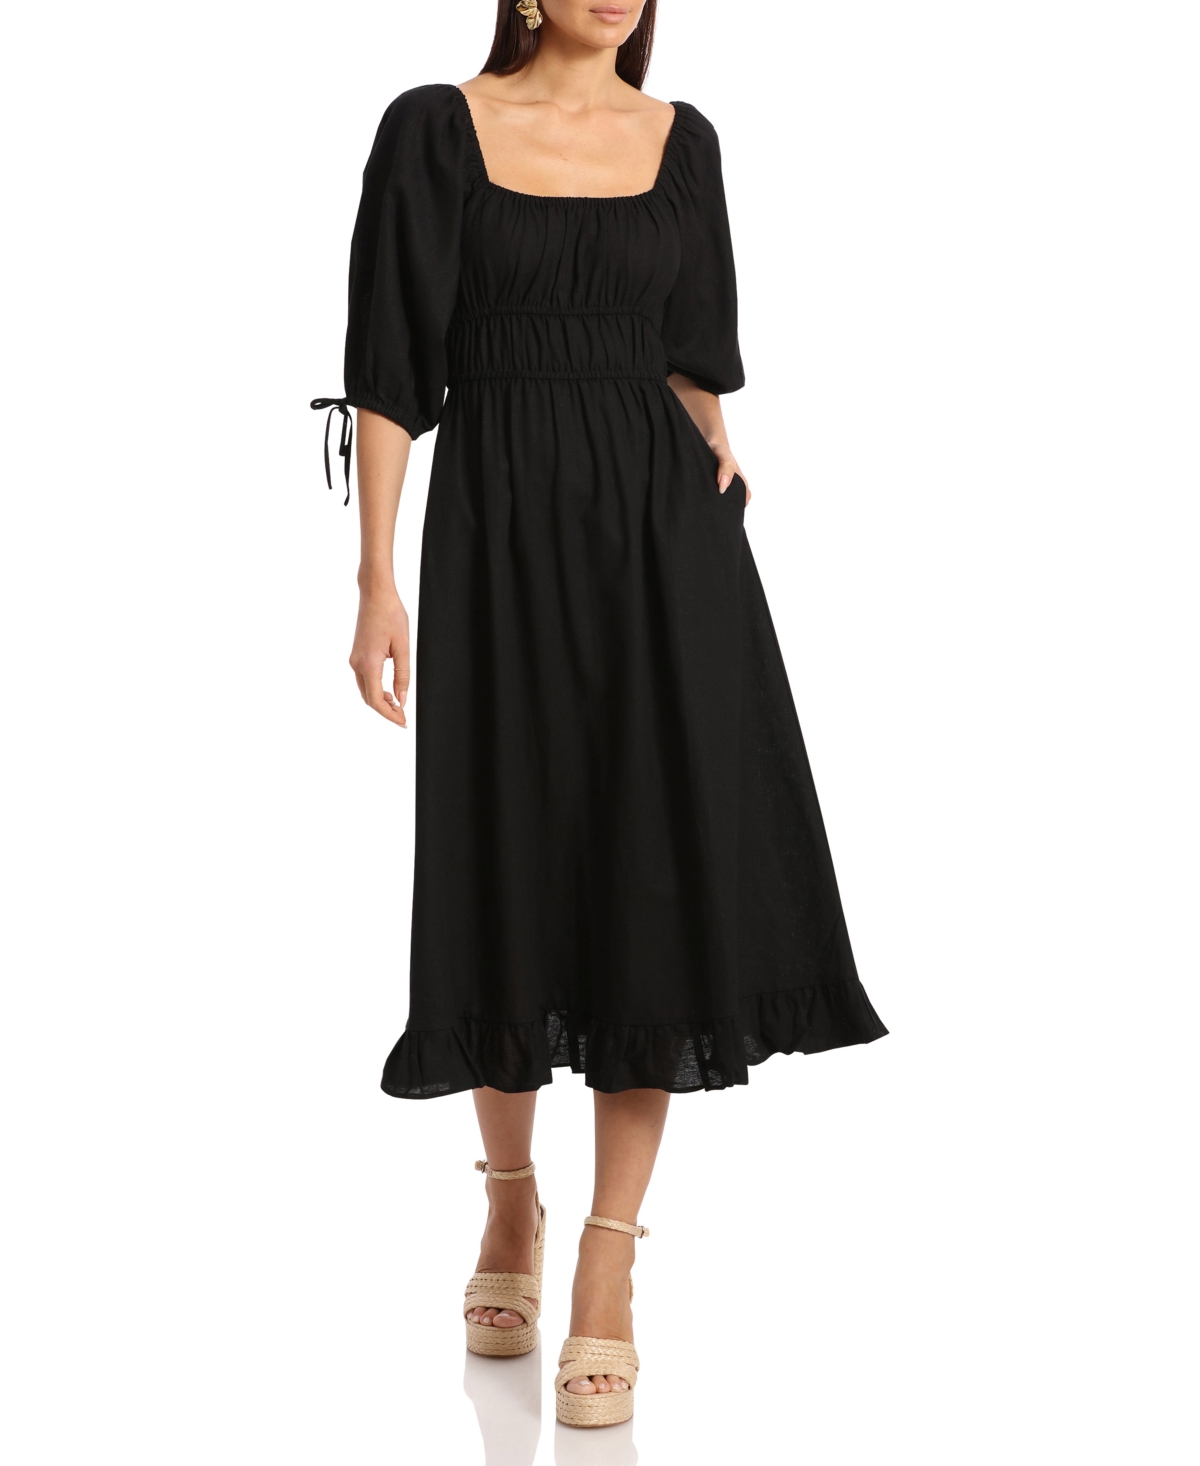 Women's Linen-Blend Fit & Flare Dress - Black